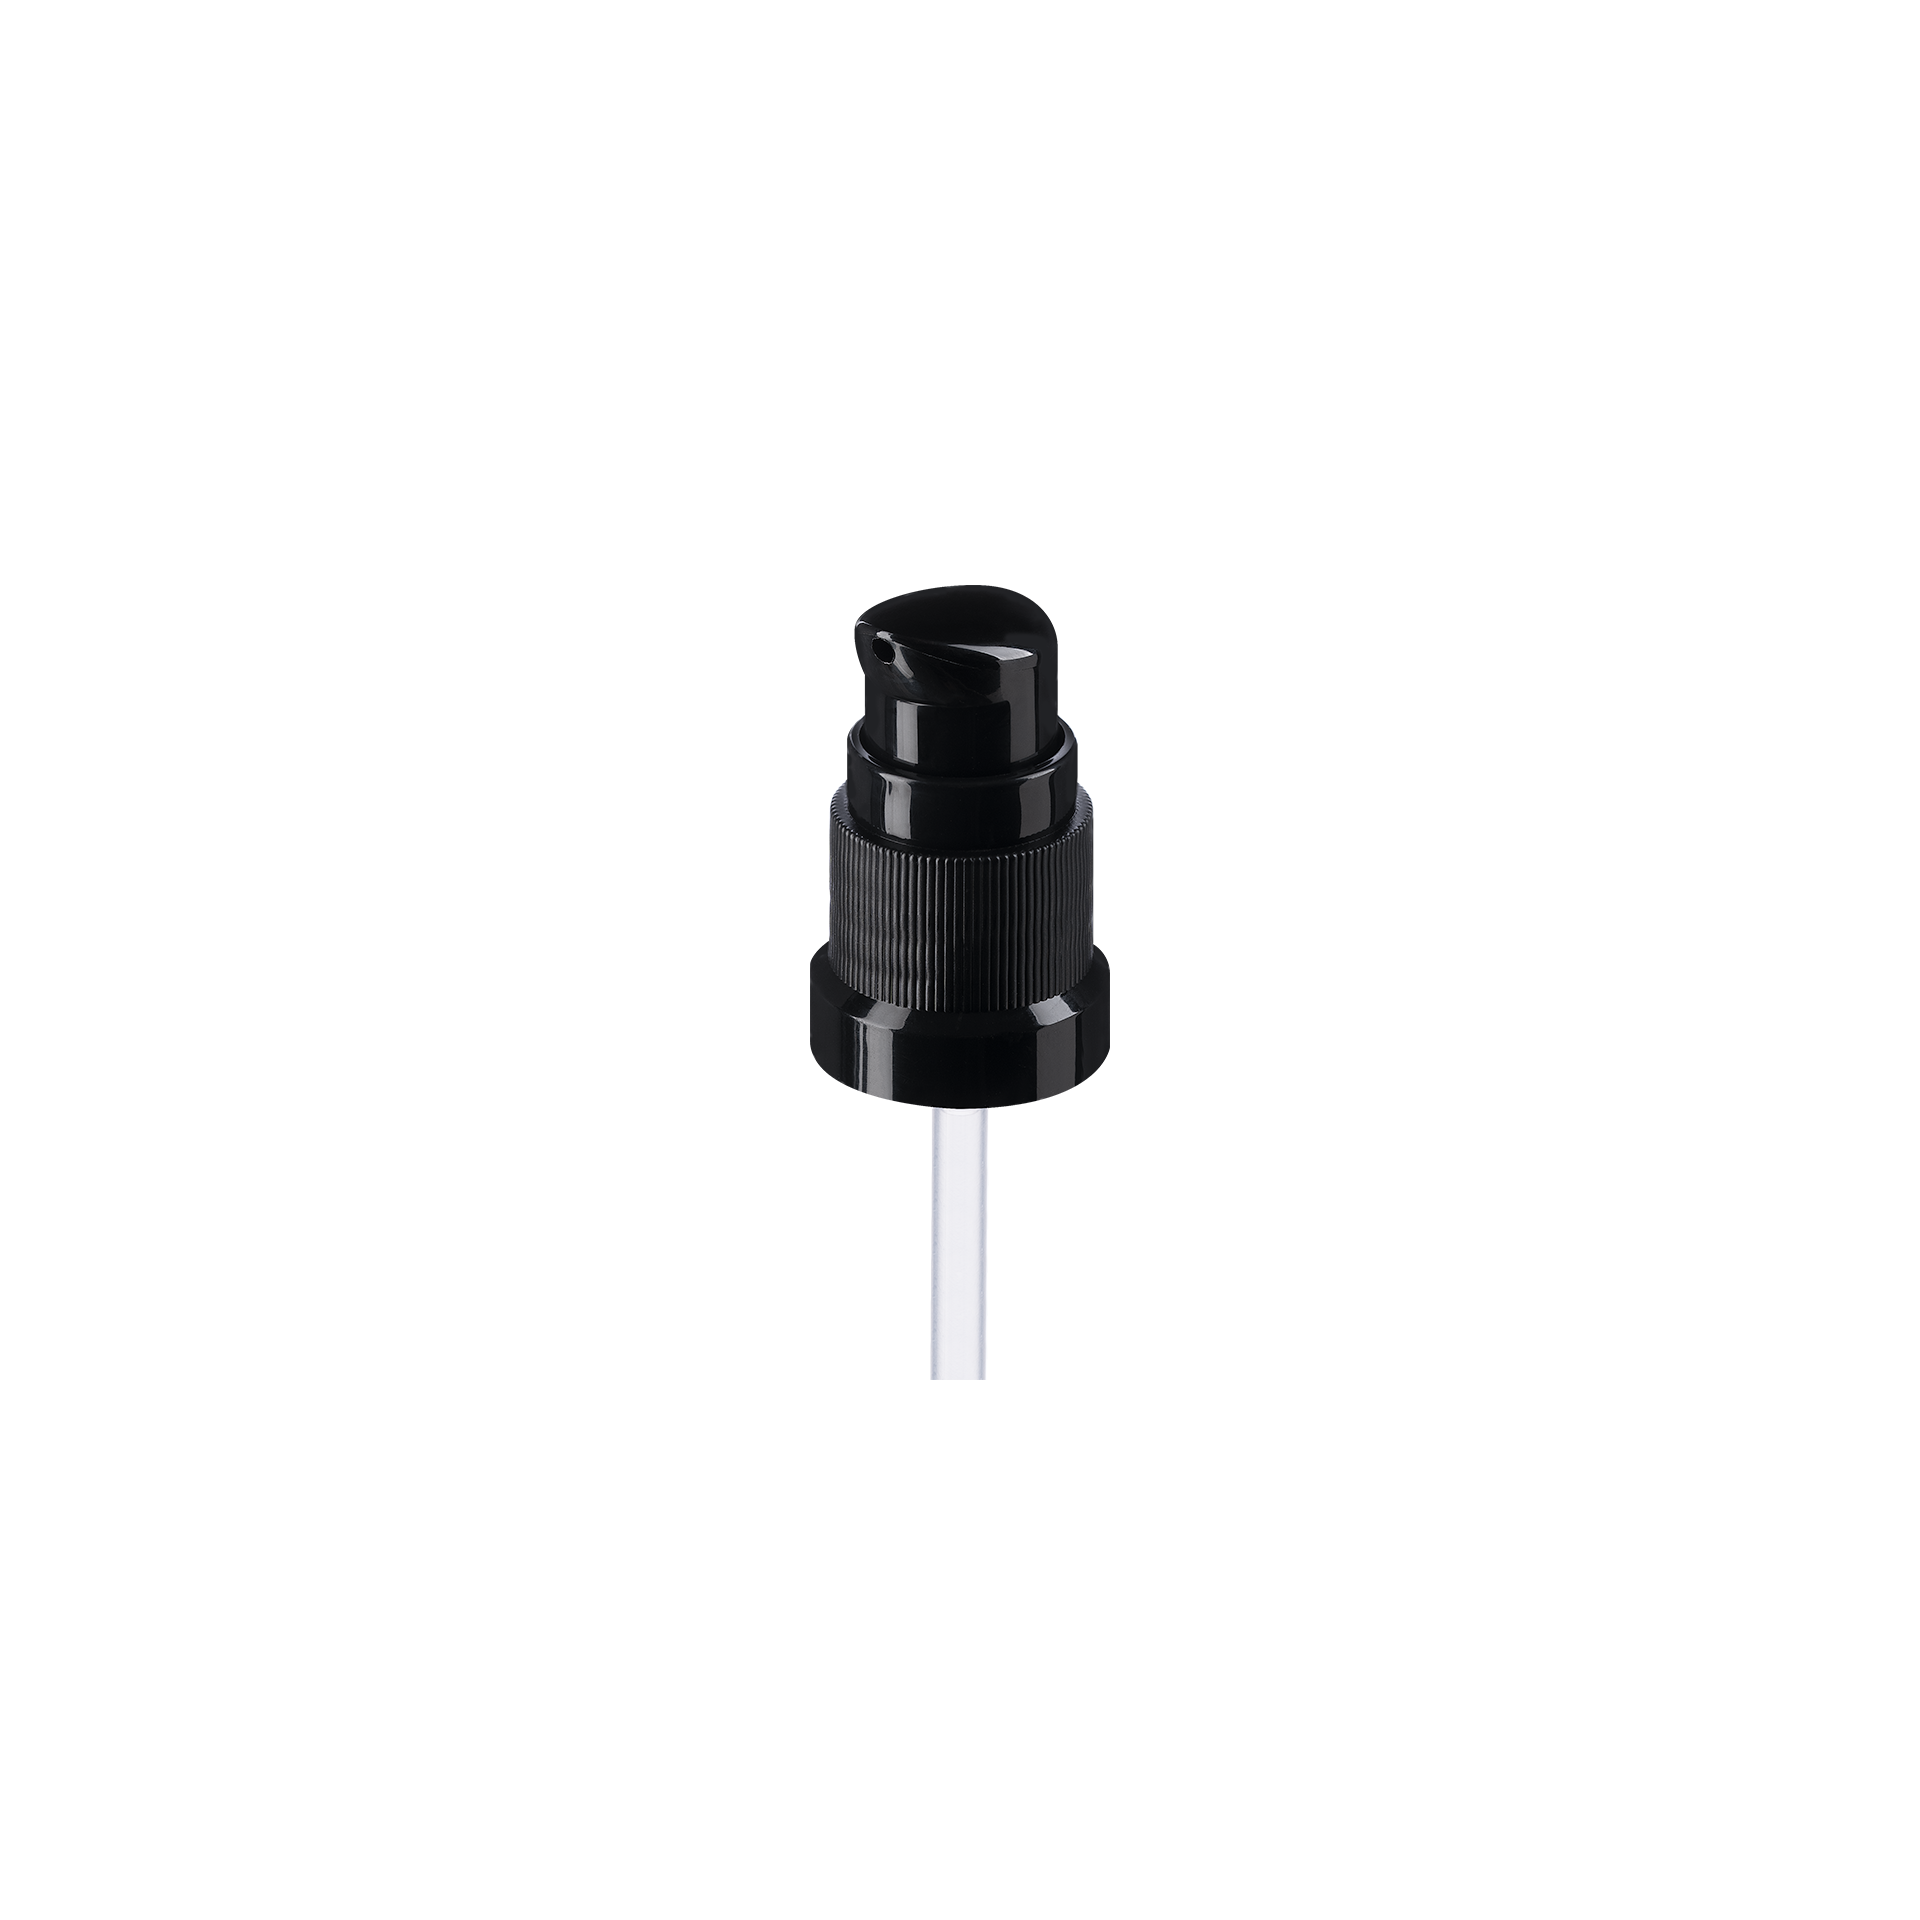 Lotion pump Metropolitan DIN18, PP, black, dose 0.15ml, black security clip (Jasmine 60)